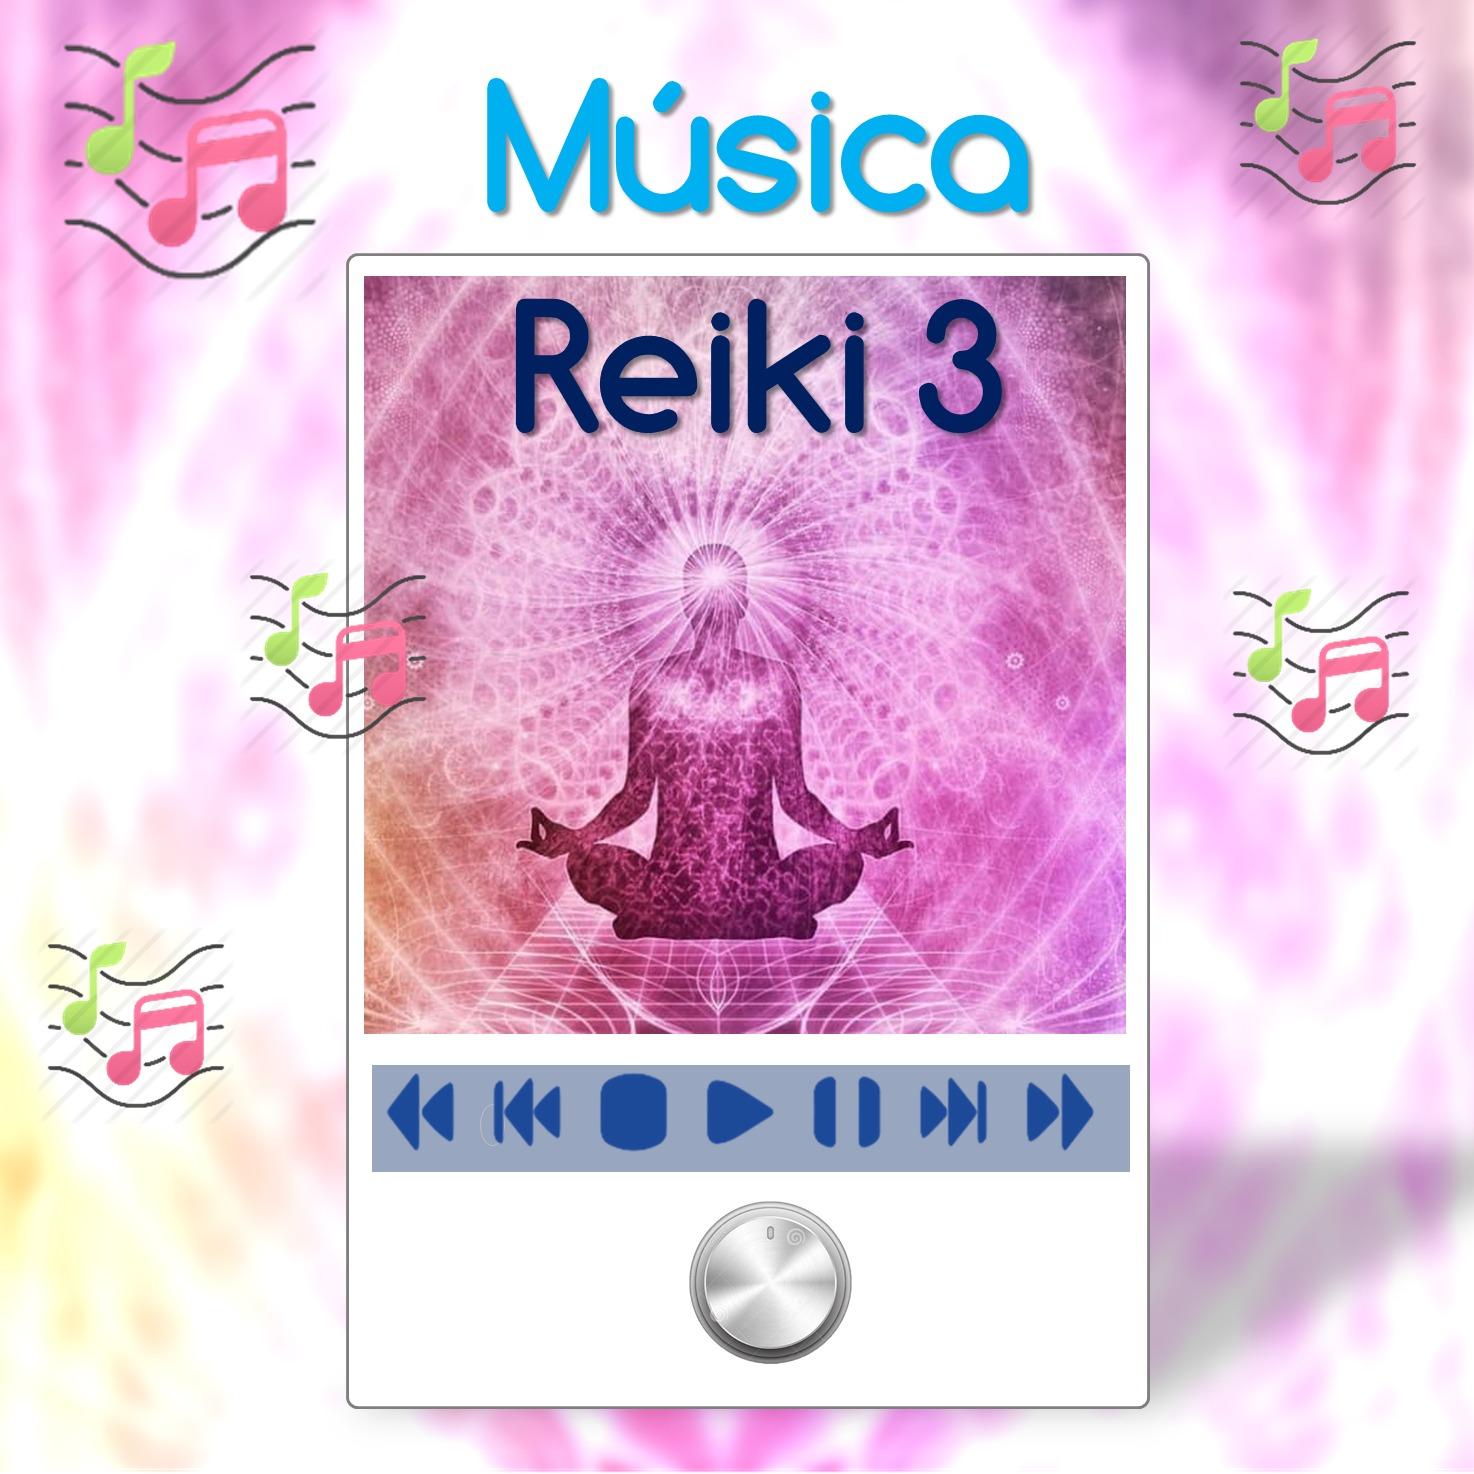 Música Reiki 3